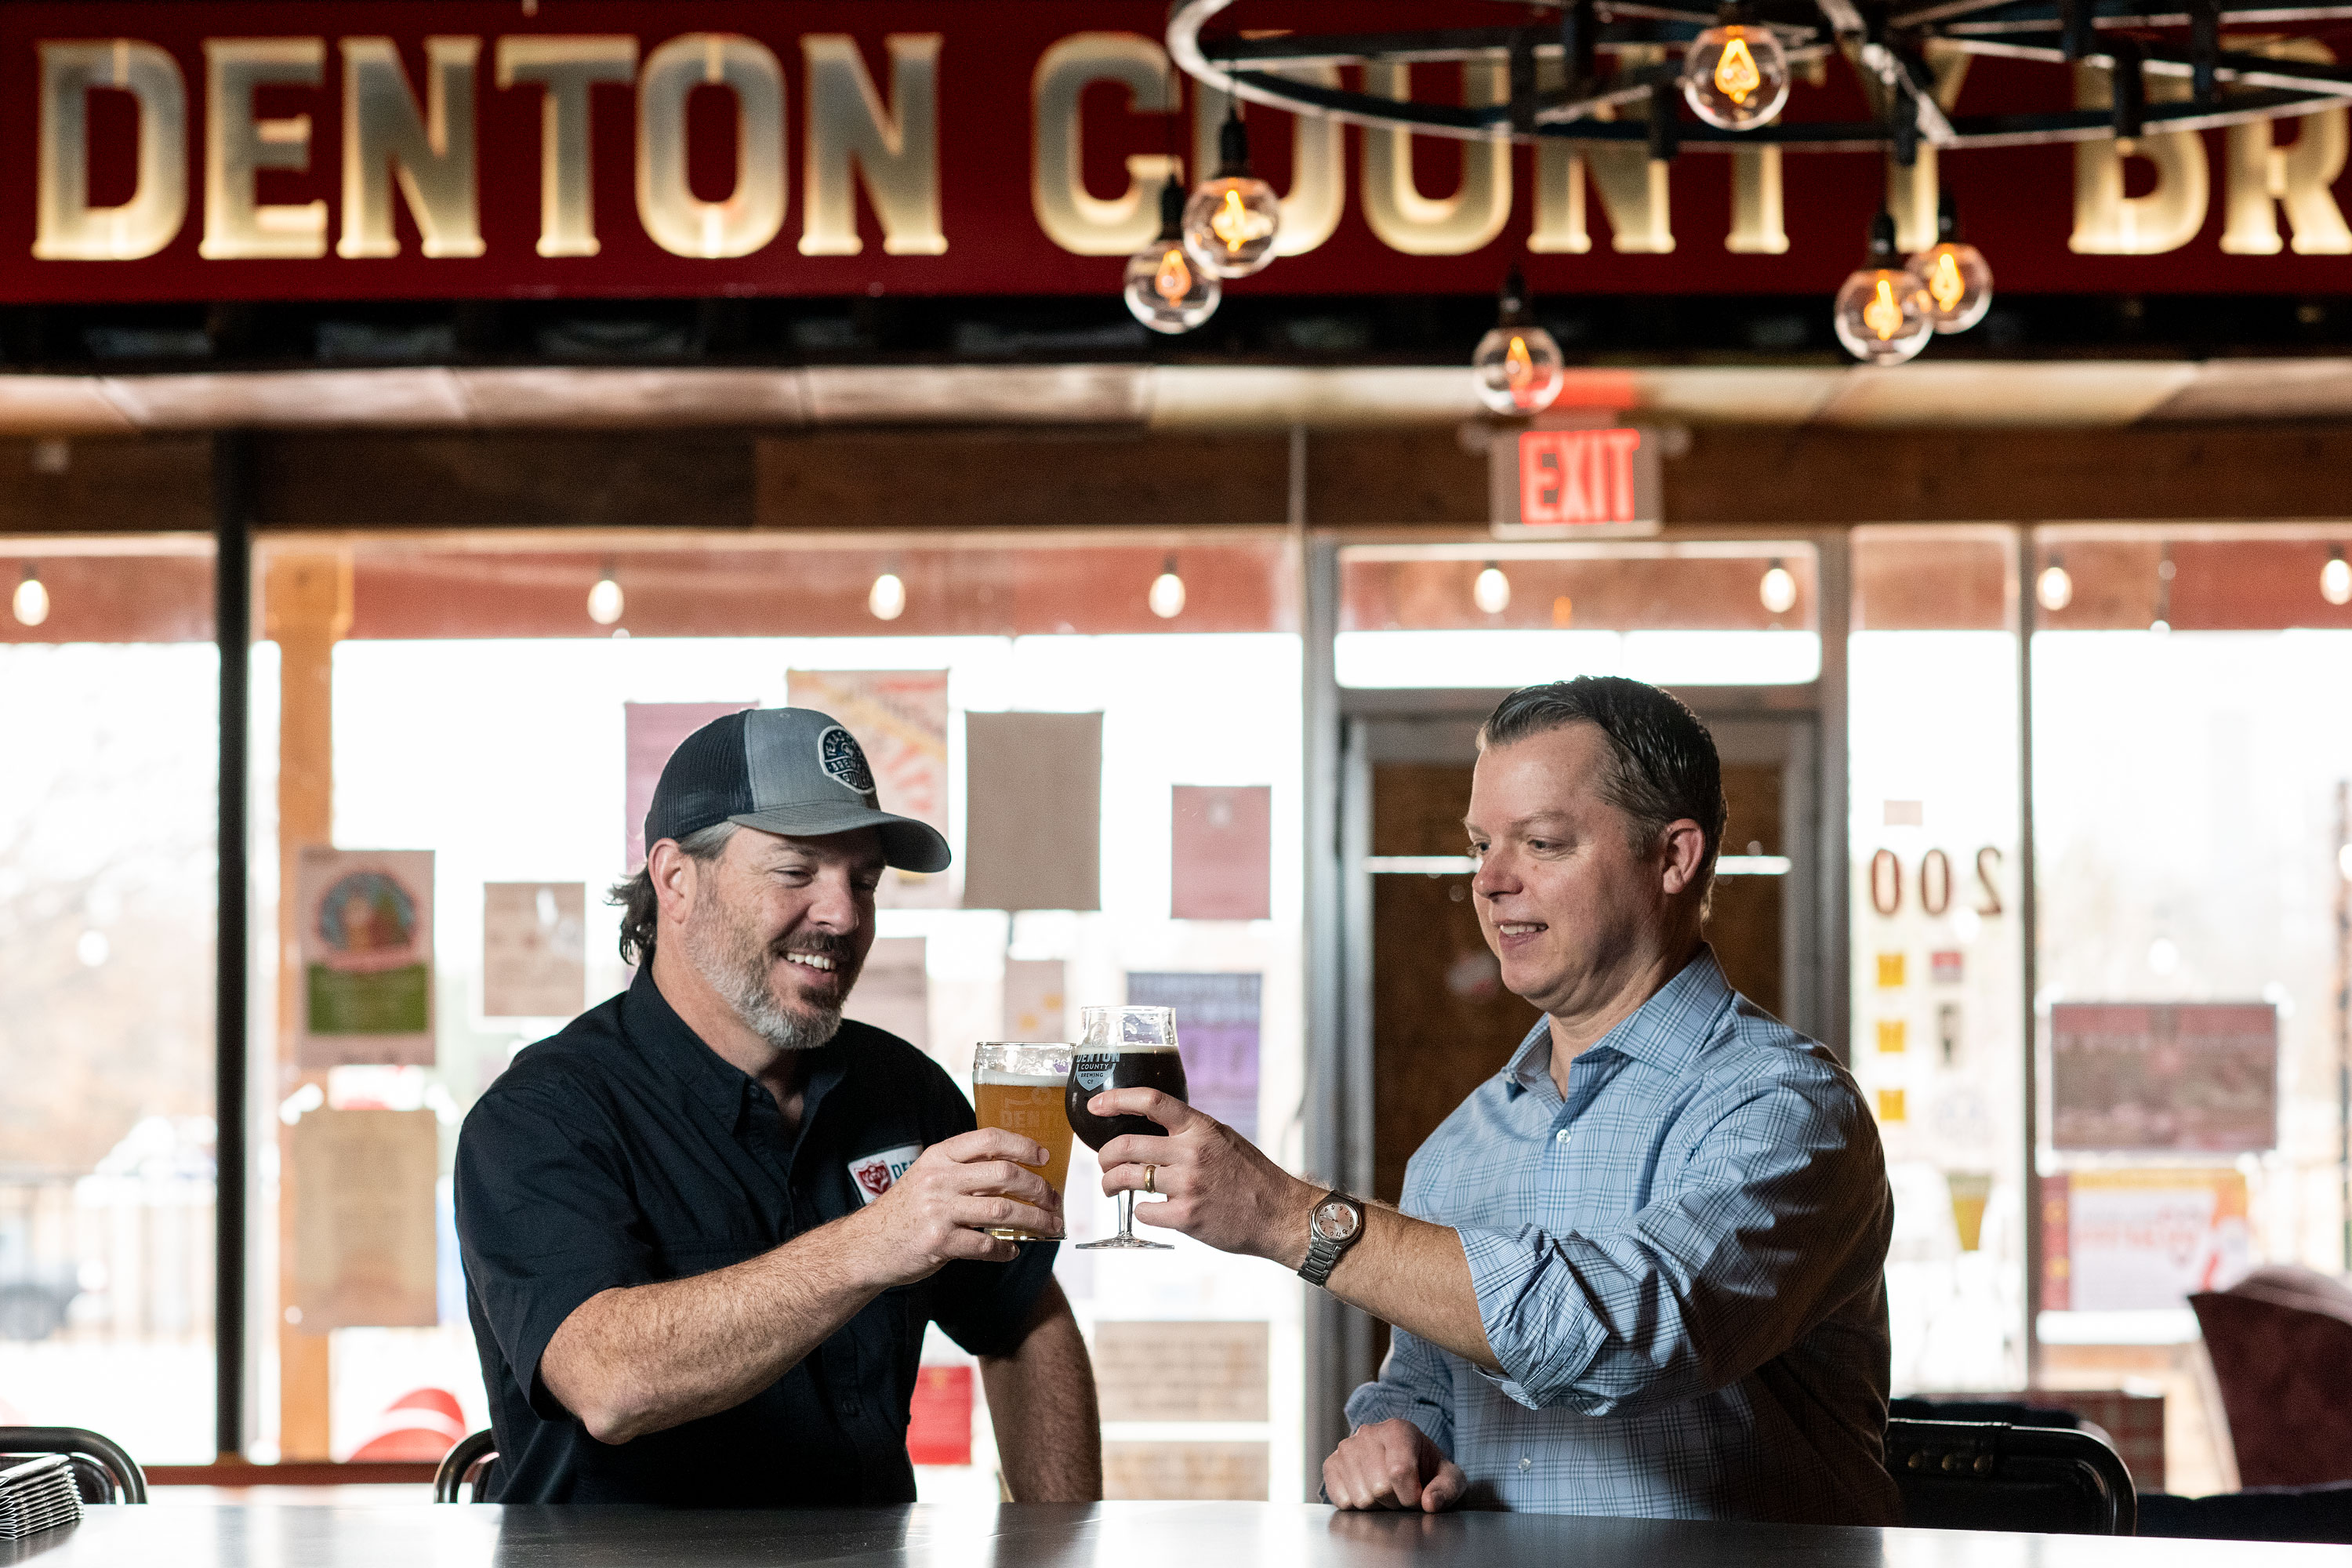 Seth Morgan and Mike Barnett inside Denton County Brewing Co.